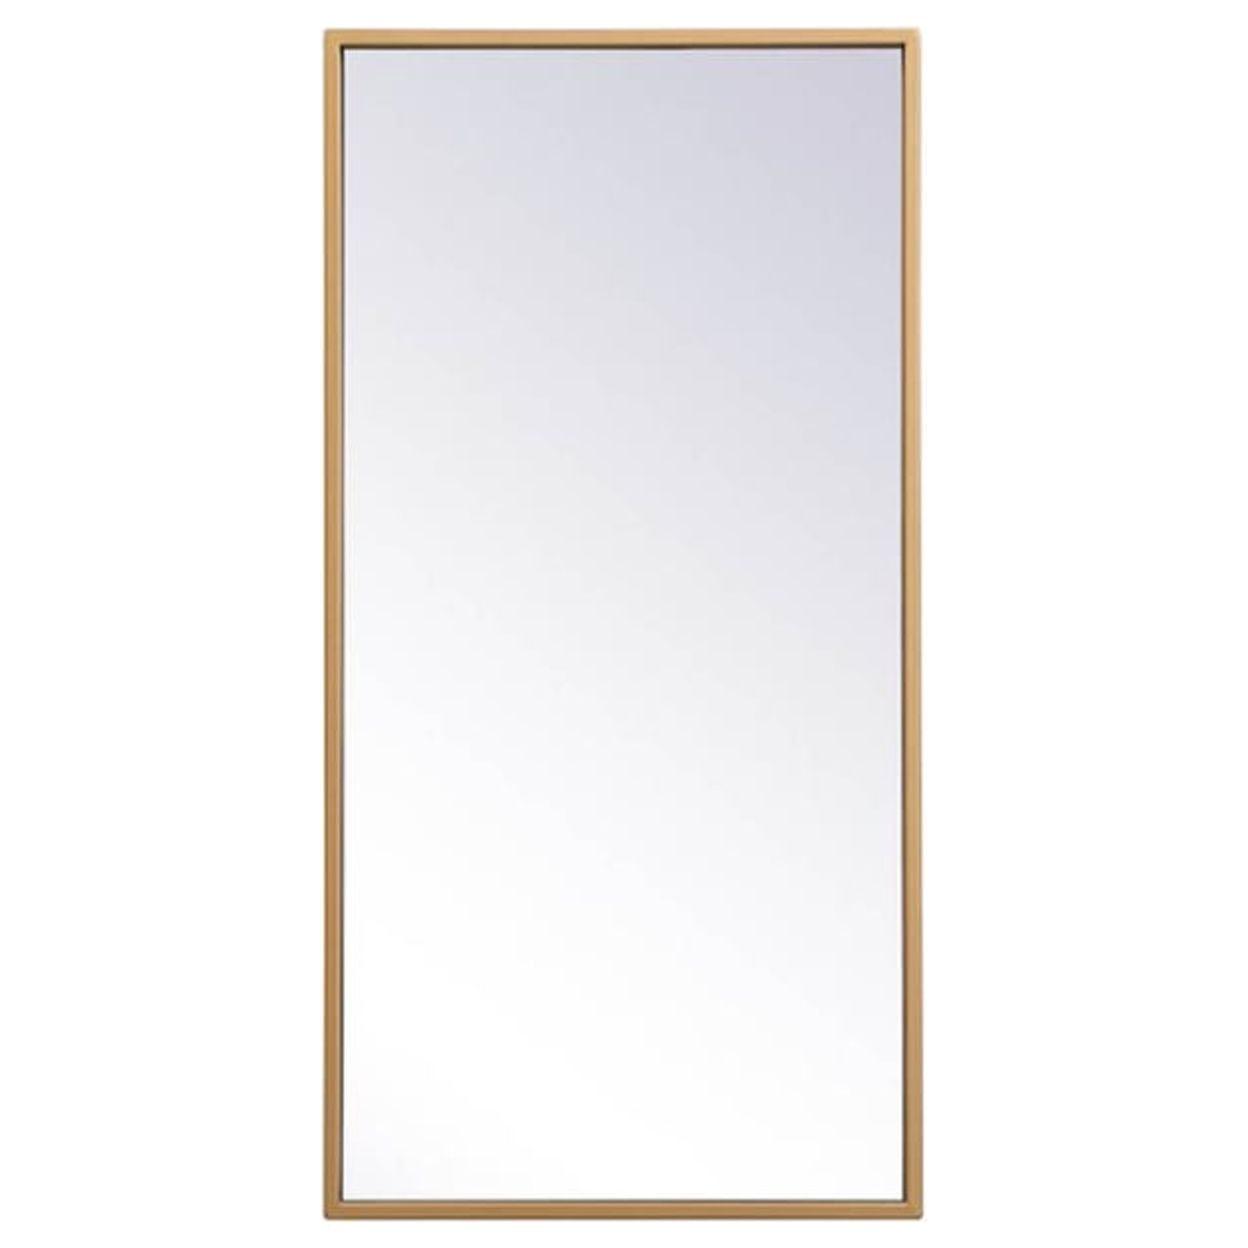 Transitional Silver Finish Rectangular Wood Mirror 14x28 inch